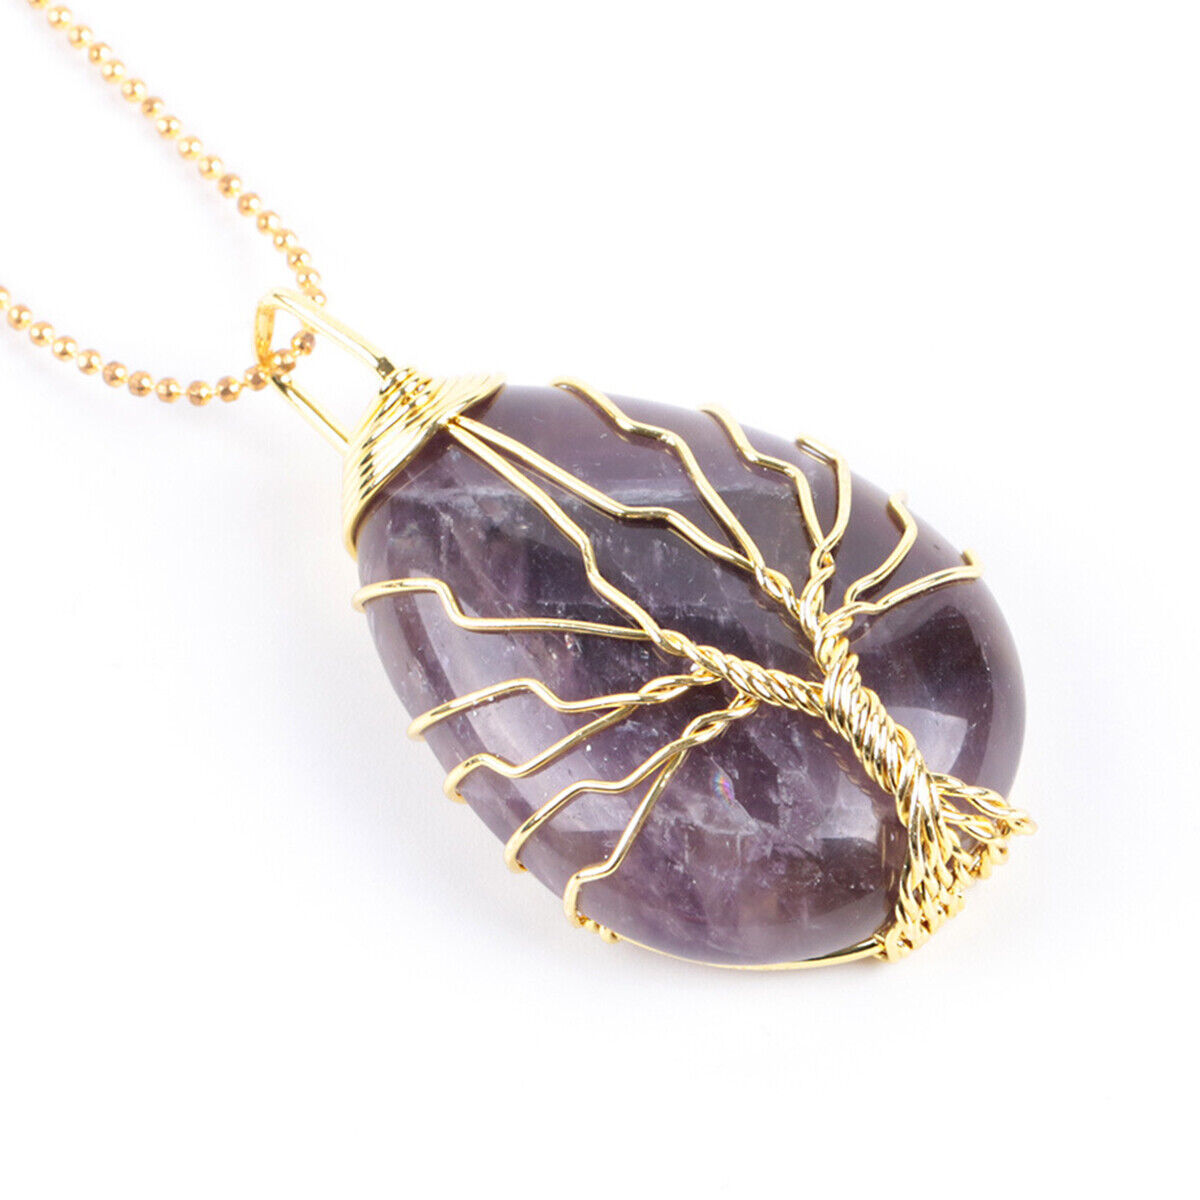 Rock quartz Stone Tree of life Energy Reiki Healing Amulet Drop Pendant Necklace